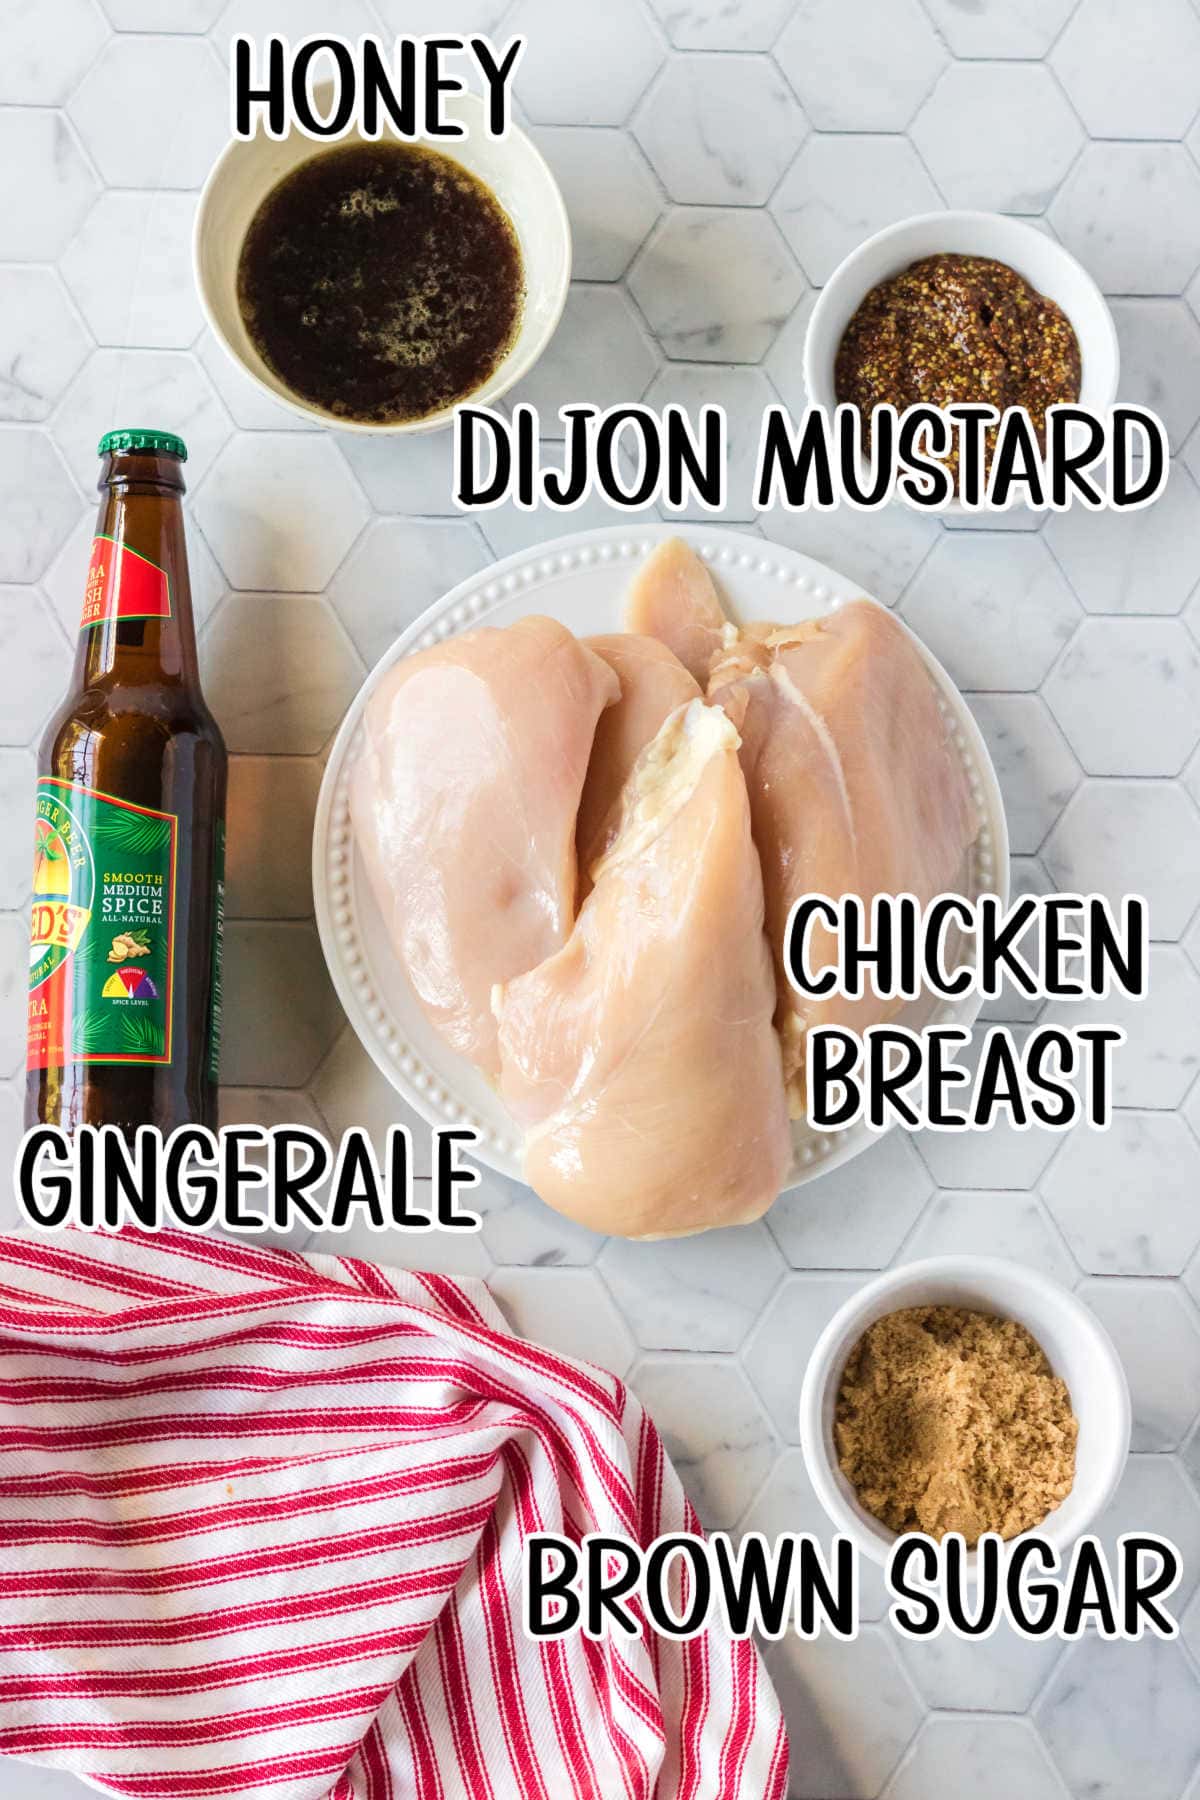 Labeled ingredients list for honey mustard chicken.